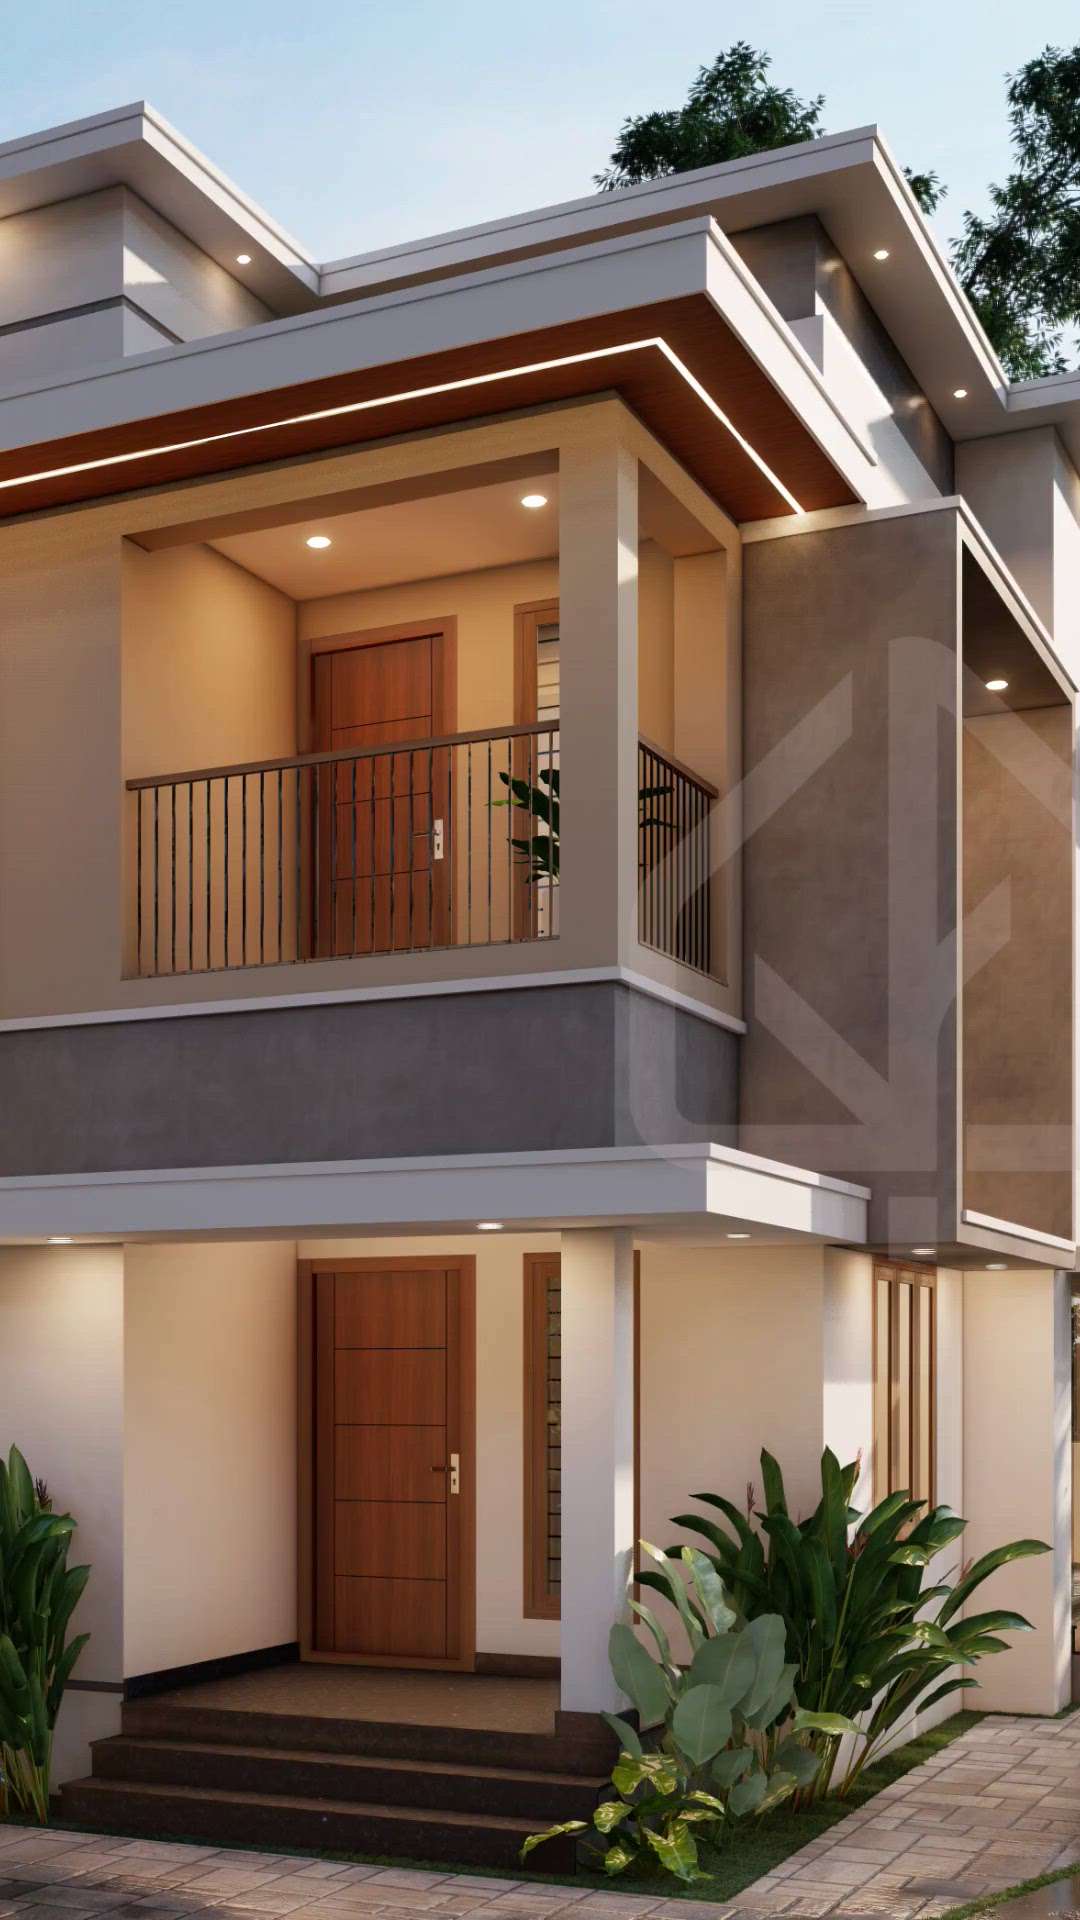 #architecturedesigns
#architecturalvisualization
#KeralaStyleHouse 
info@ayzarch.com
+91 8714 192 156